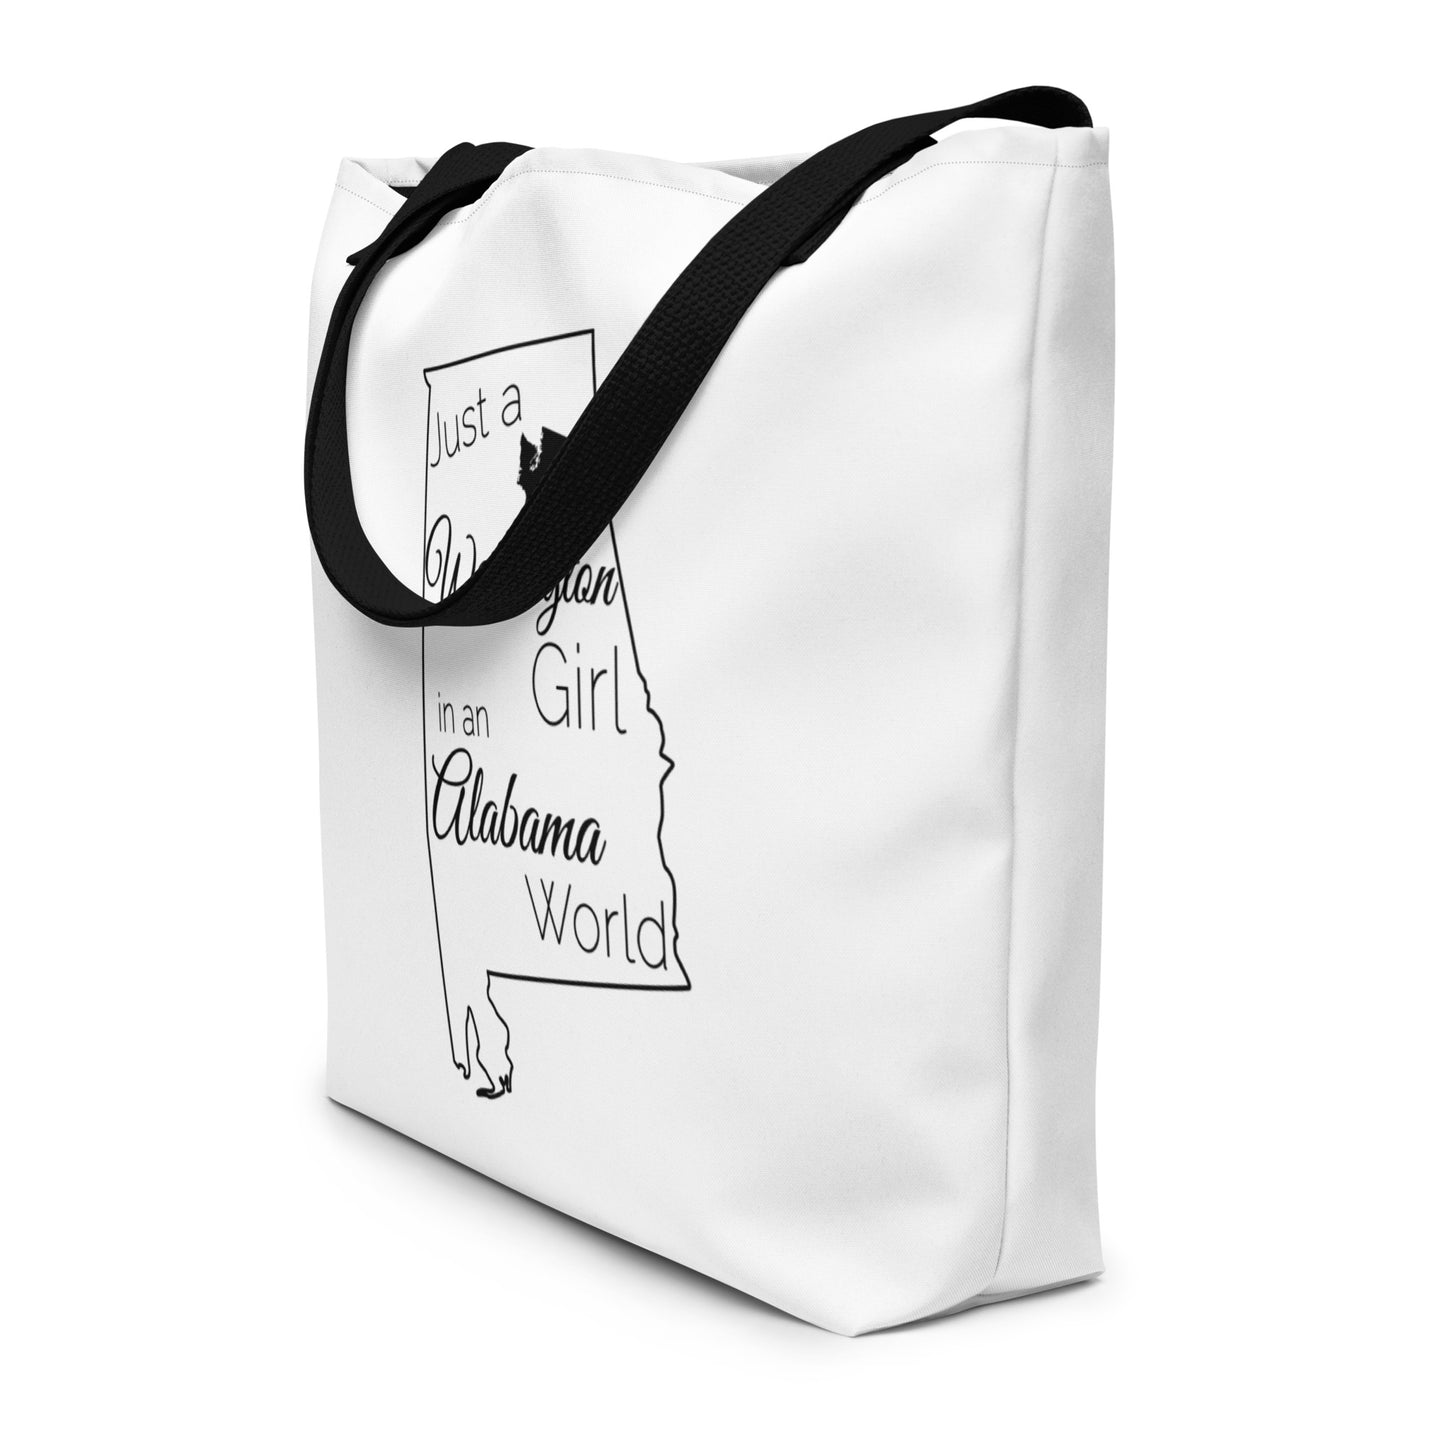 Just a Washington Girl in an Alabama World Large Tote Bag